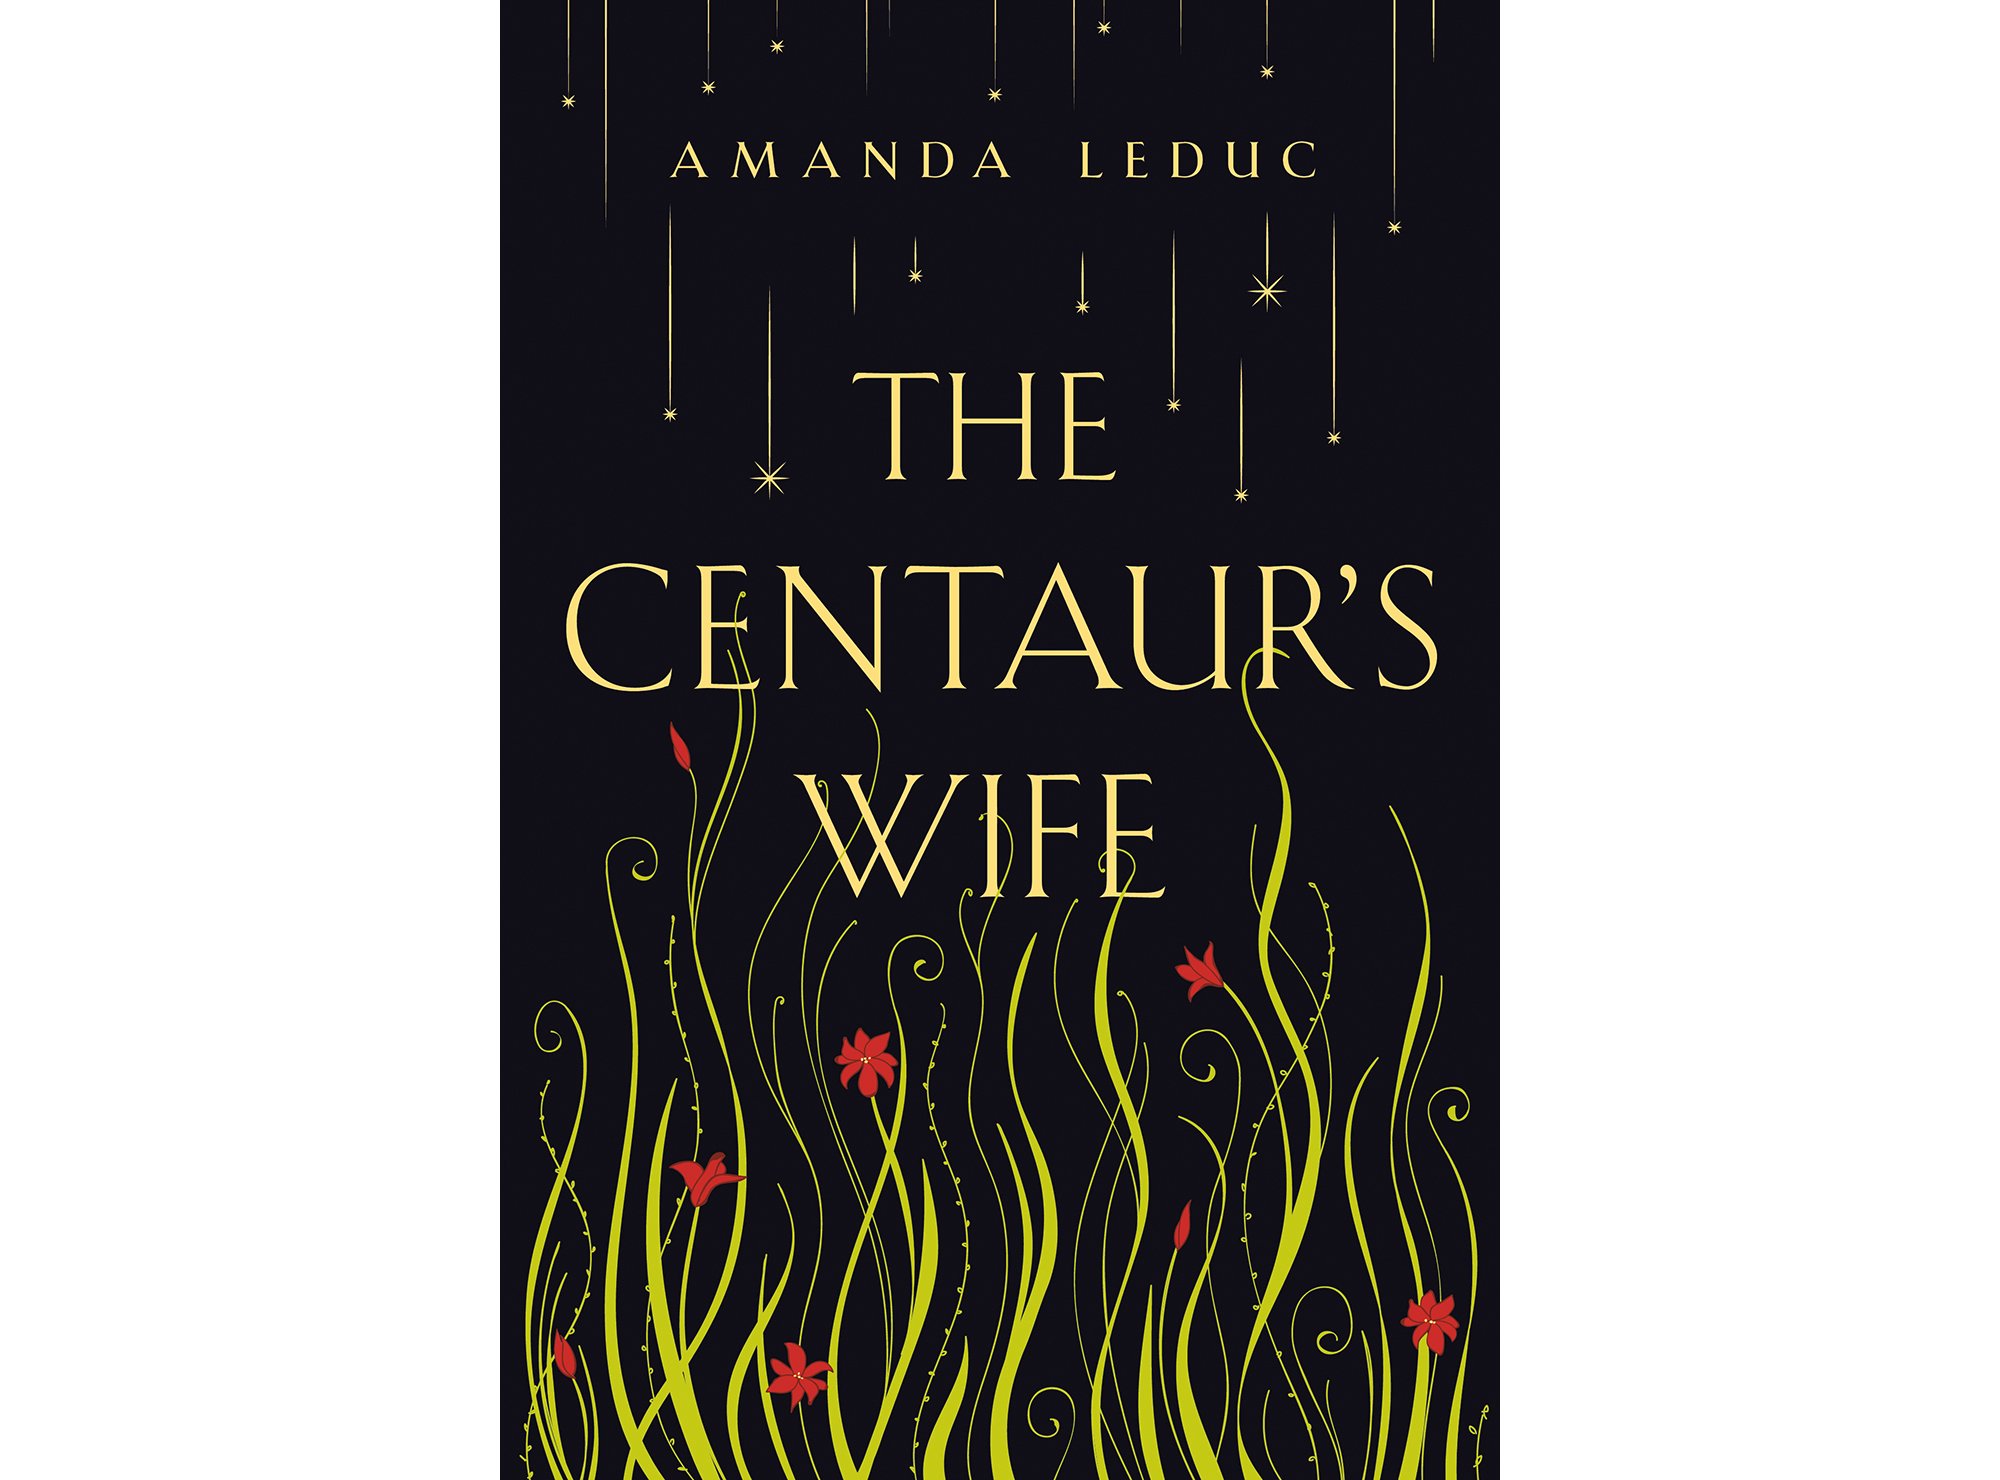 The cover of Amanda Leduc's The Centaur's Wife